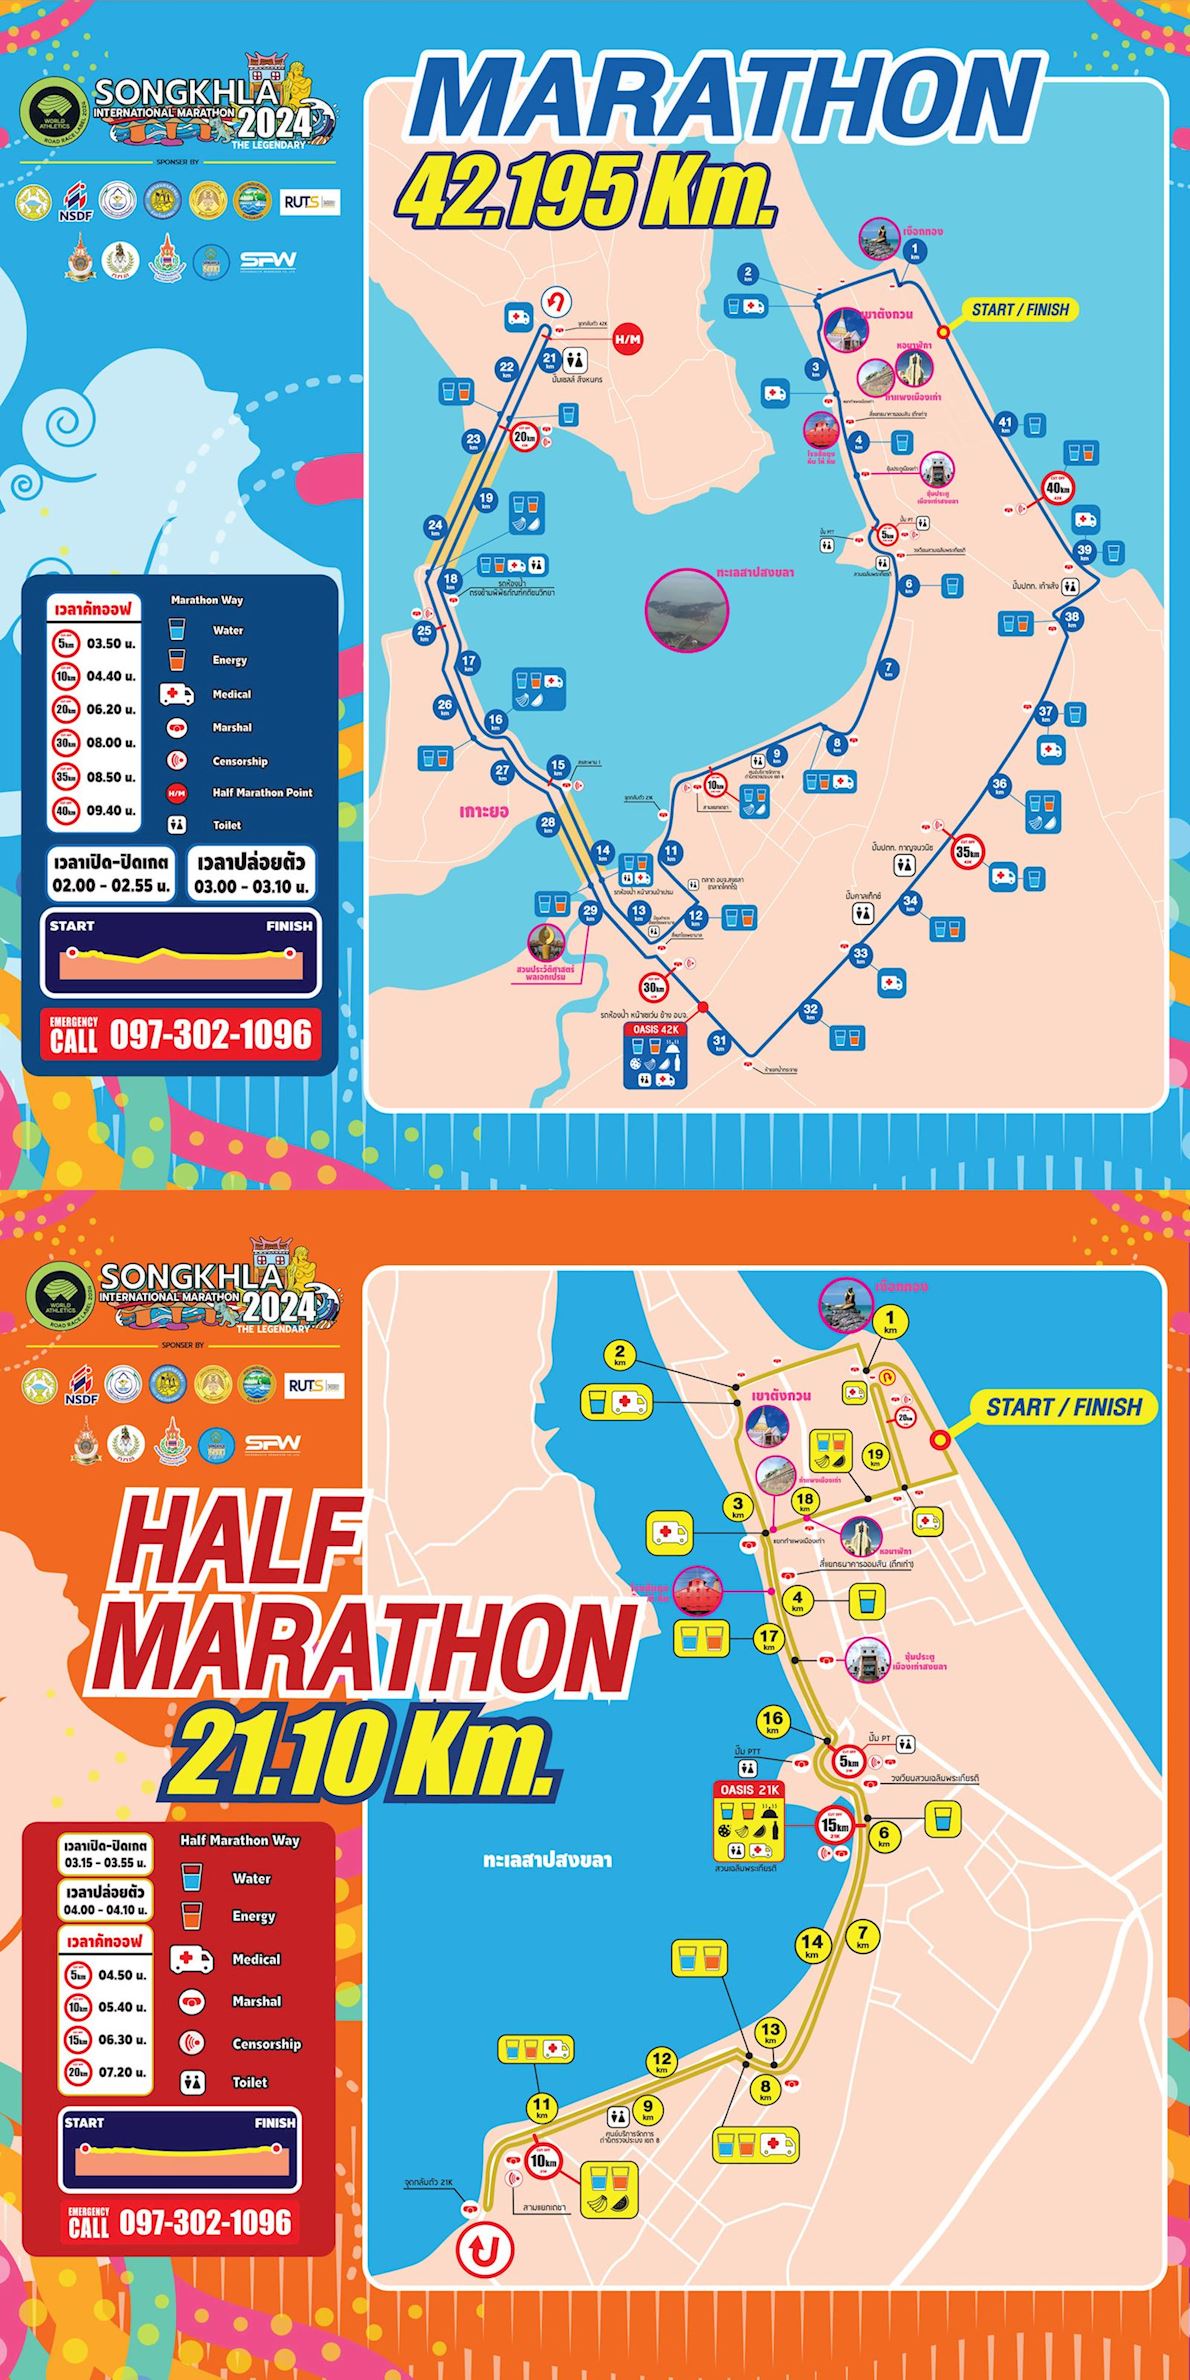 Songkhla International Marathon Route Map